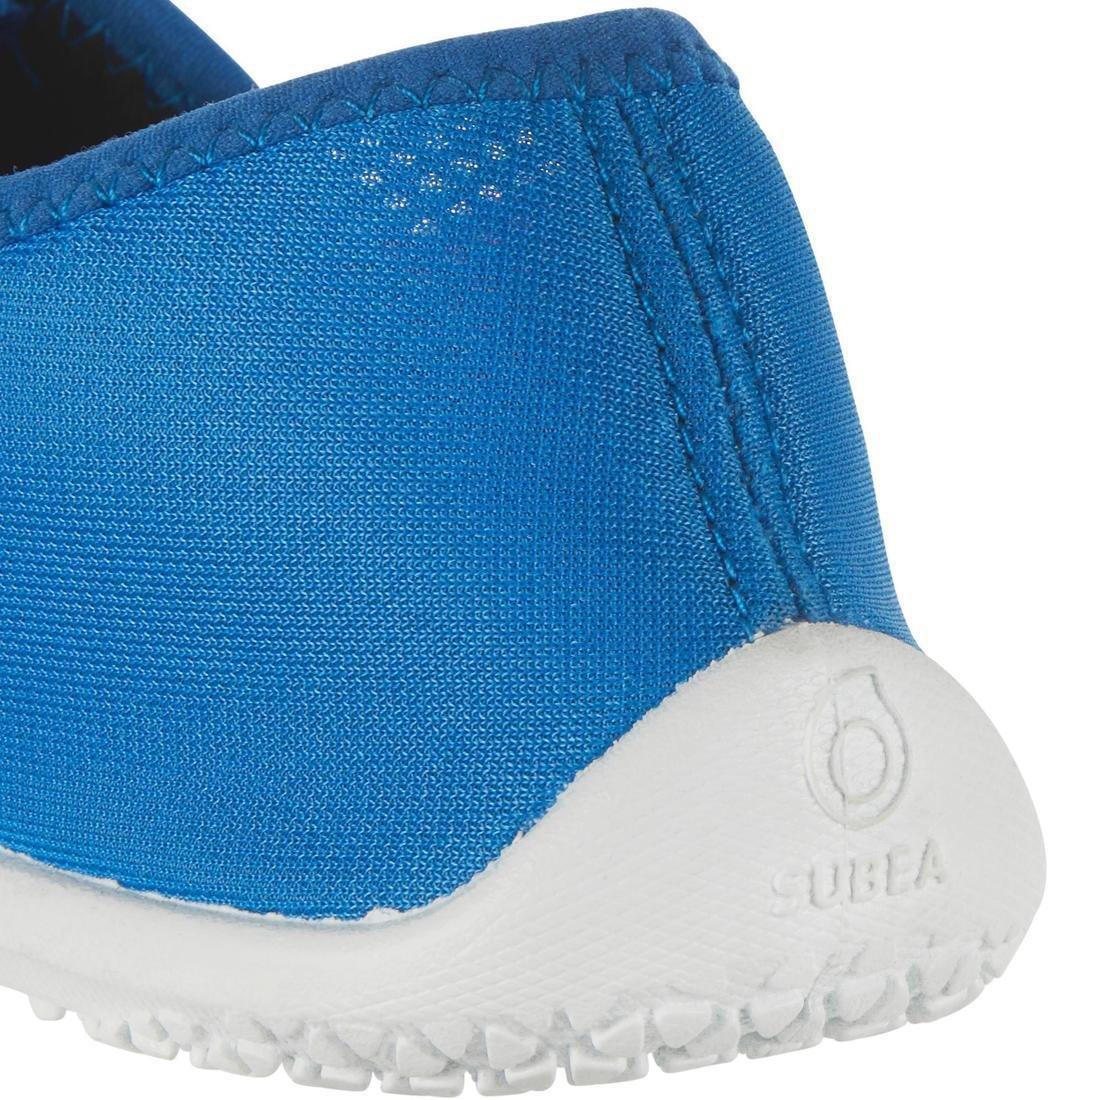 SUBEA - Adult Shoes 120, Royal Blue